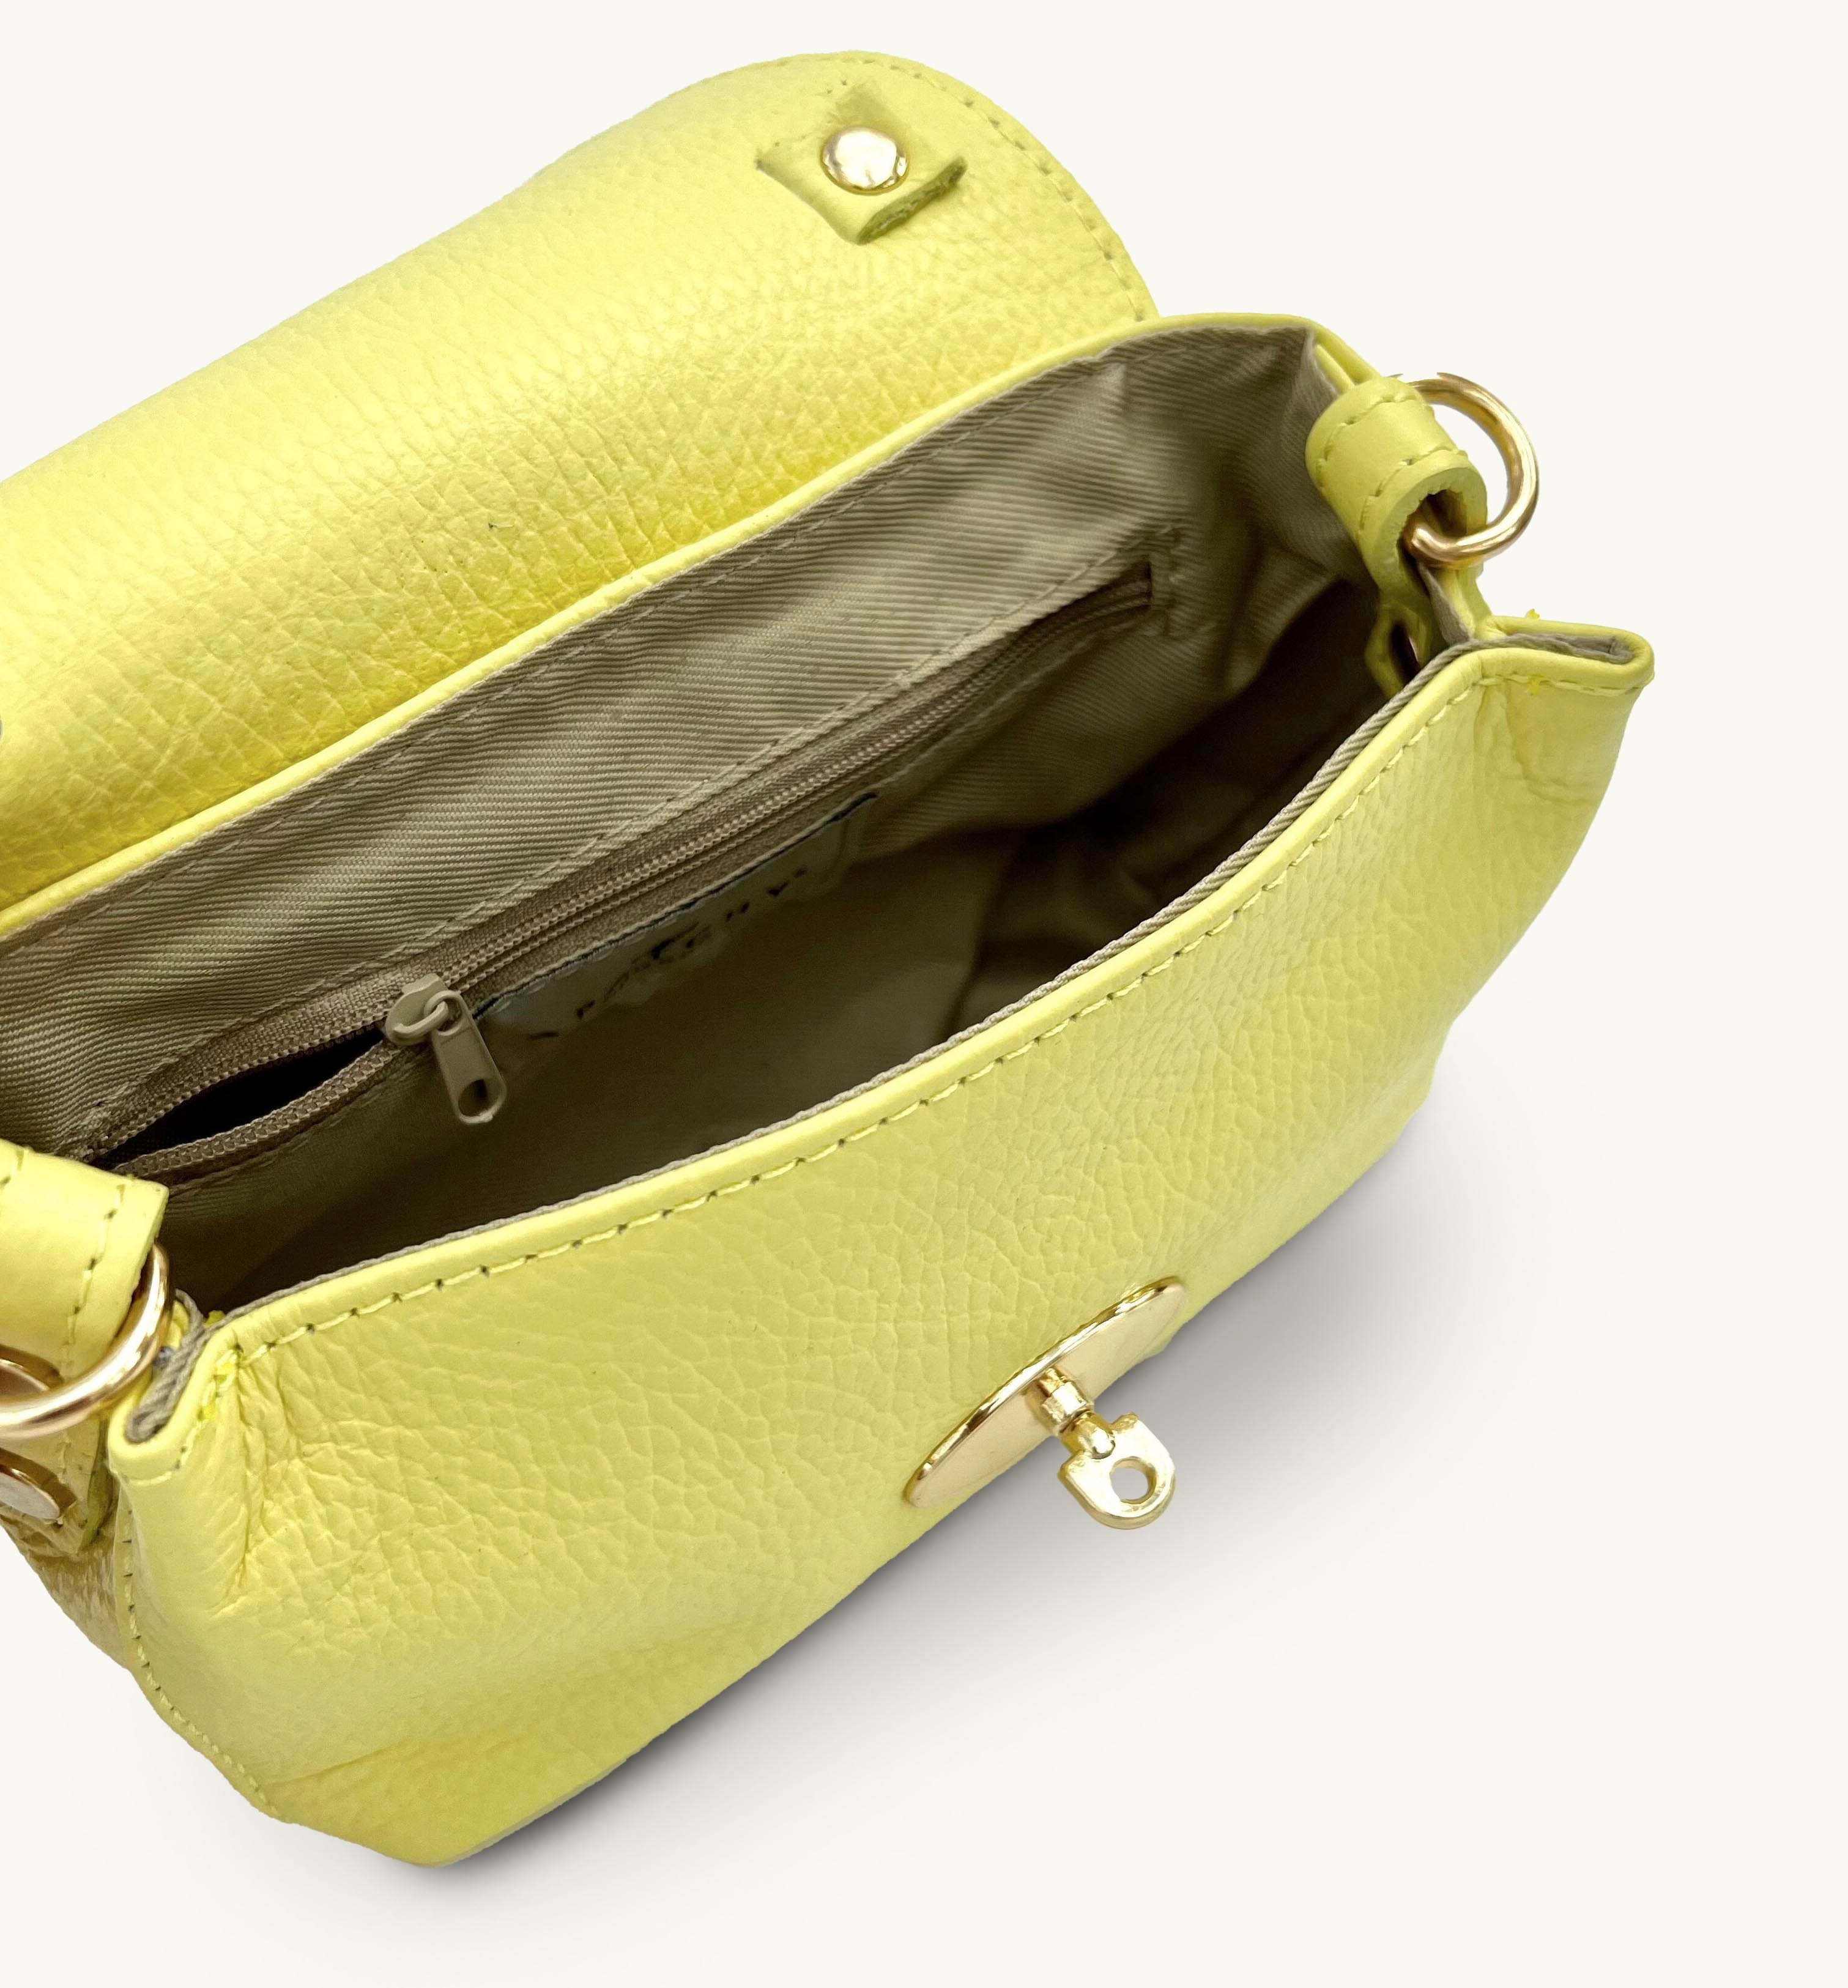 The Rachel Lemon Leather Bag